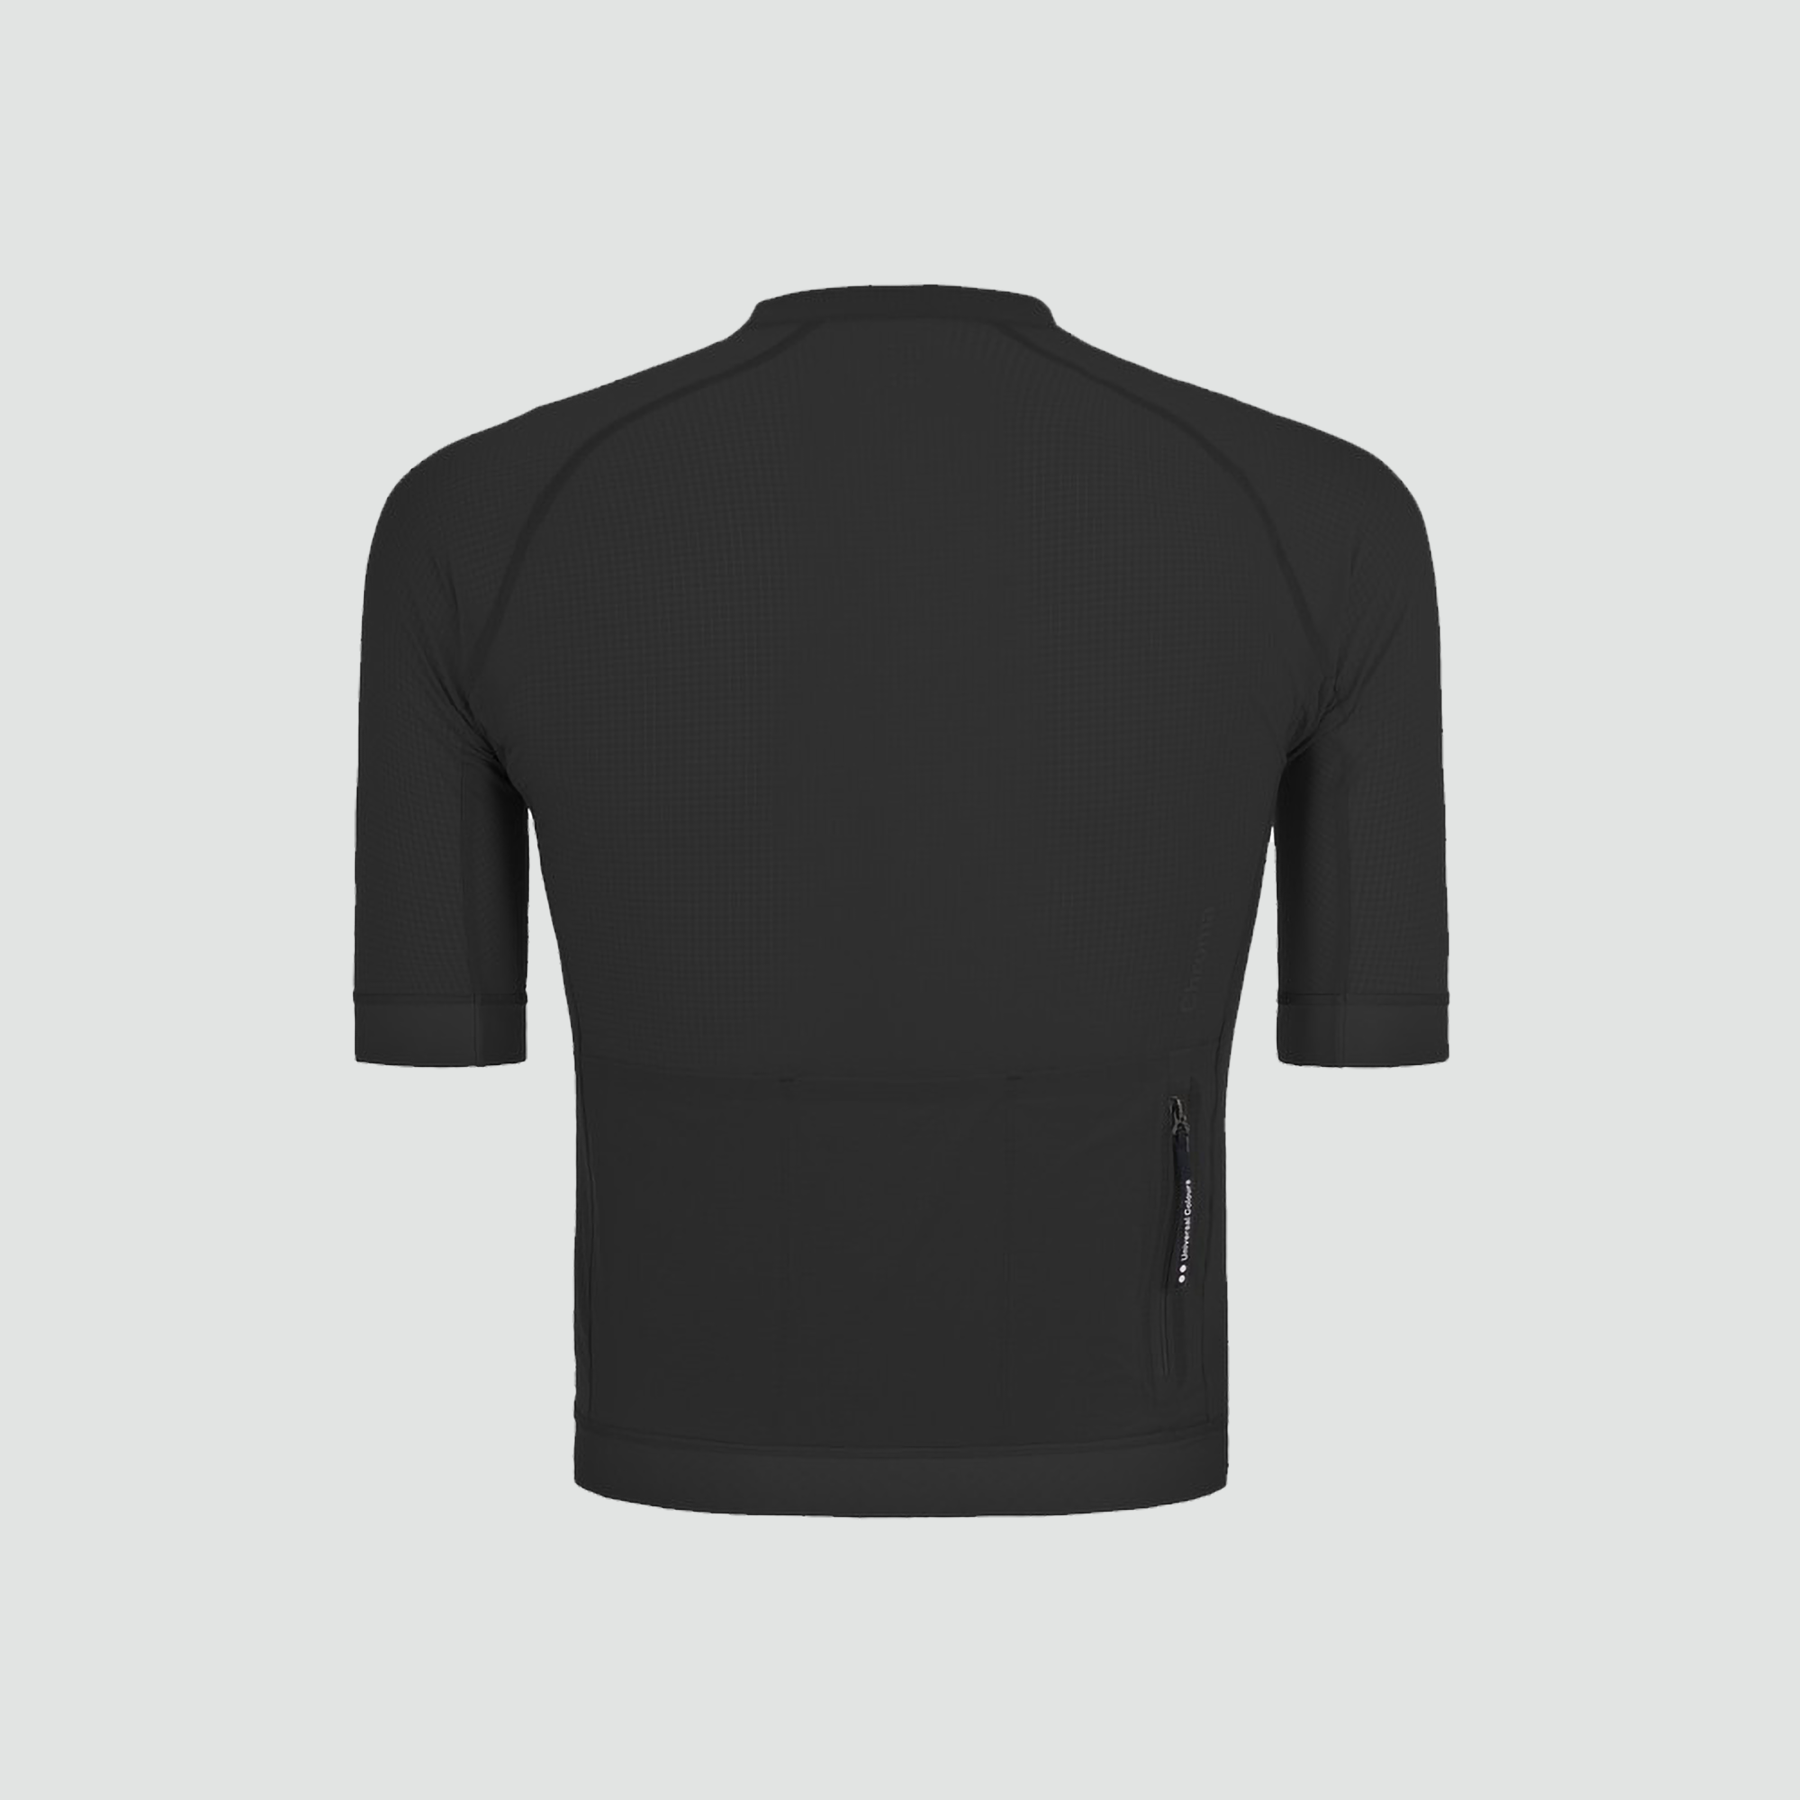 Chroma Short Sleeve Jersey - Black